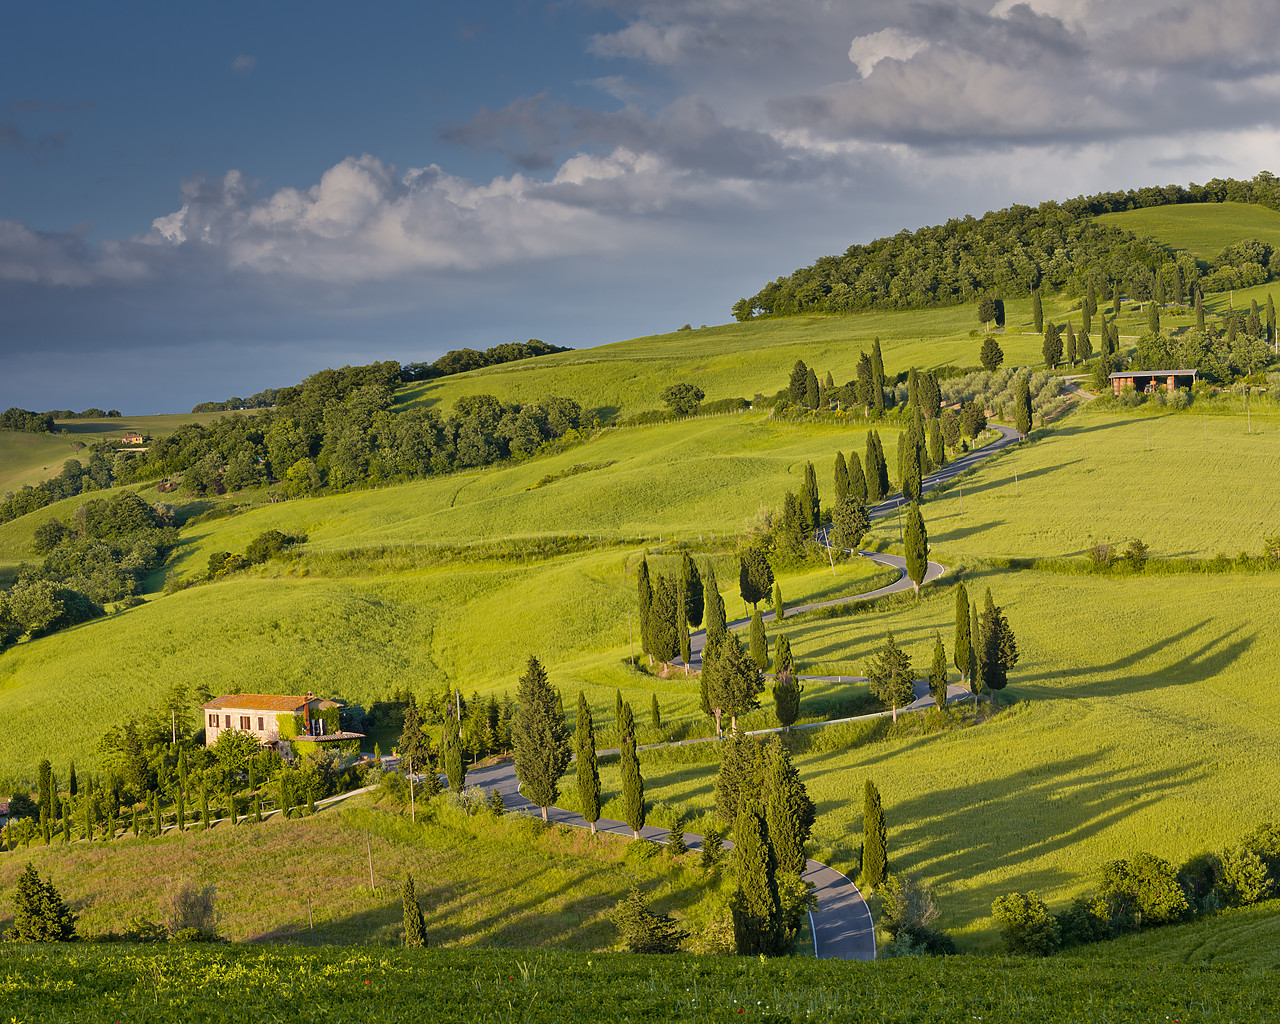 #130206-1 - Villa & Winding Road, Monticchiello, Tuscany, Italy